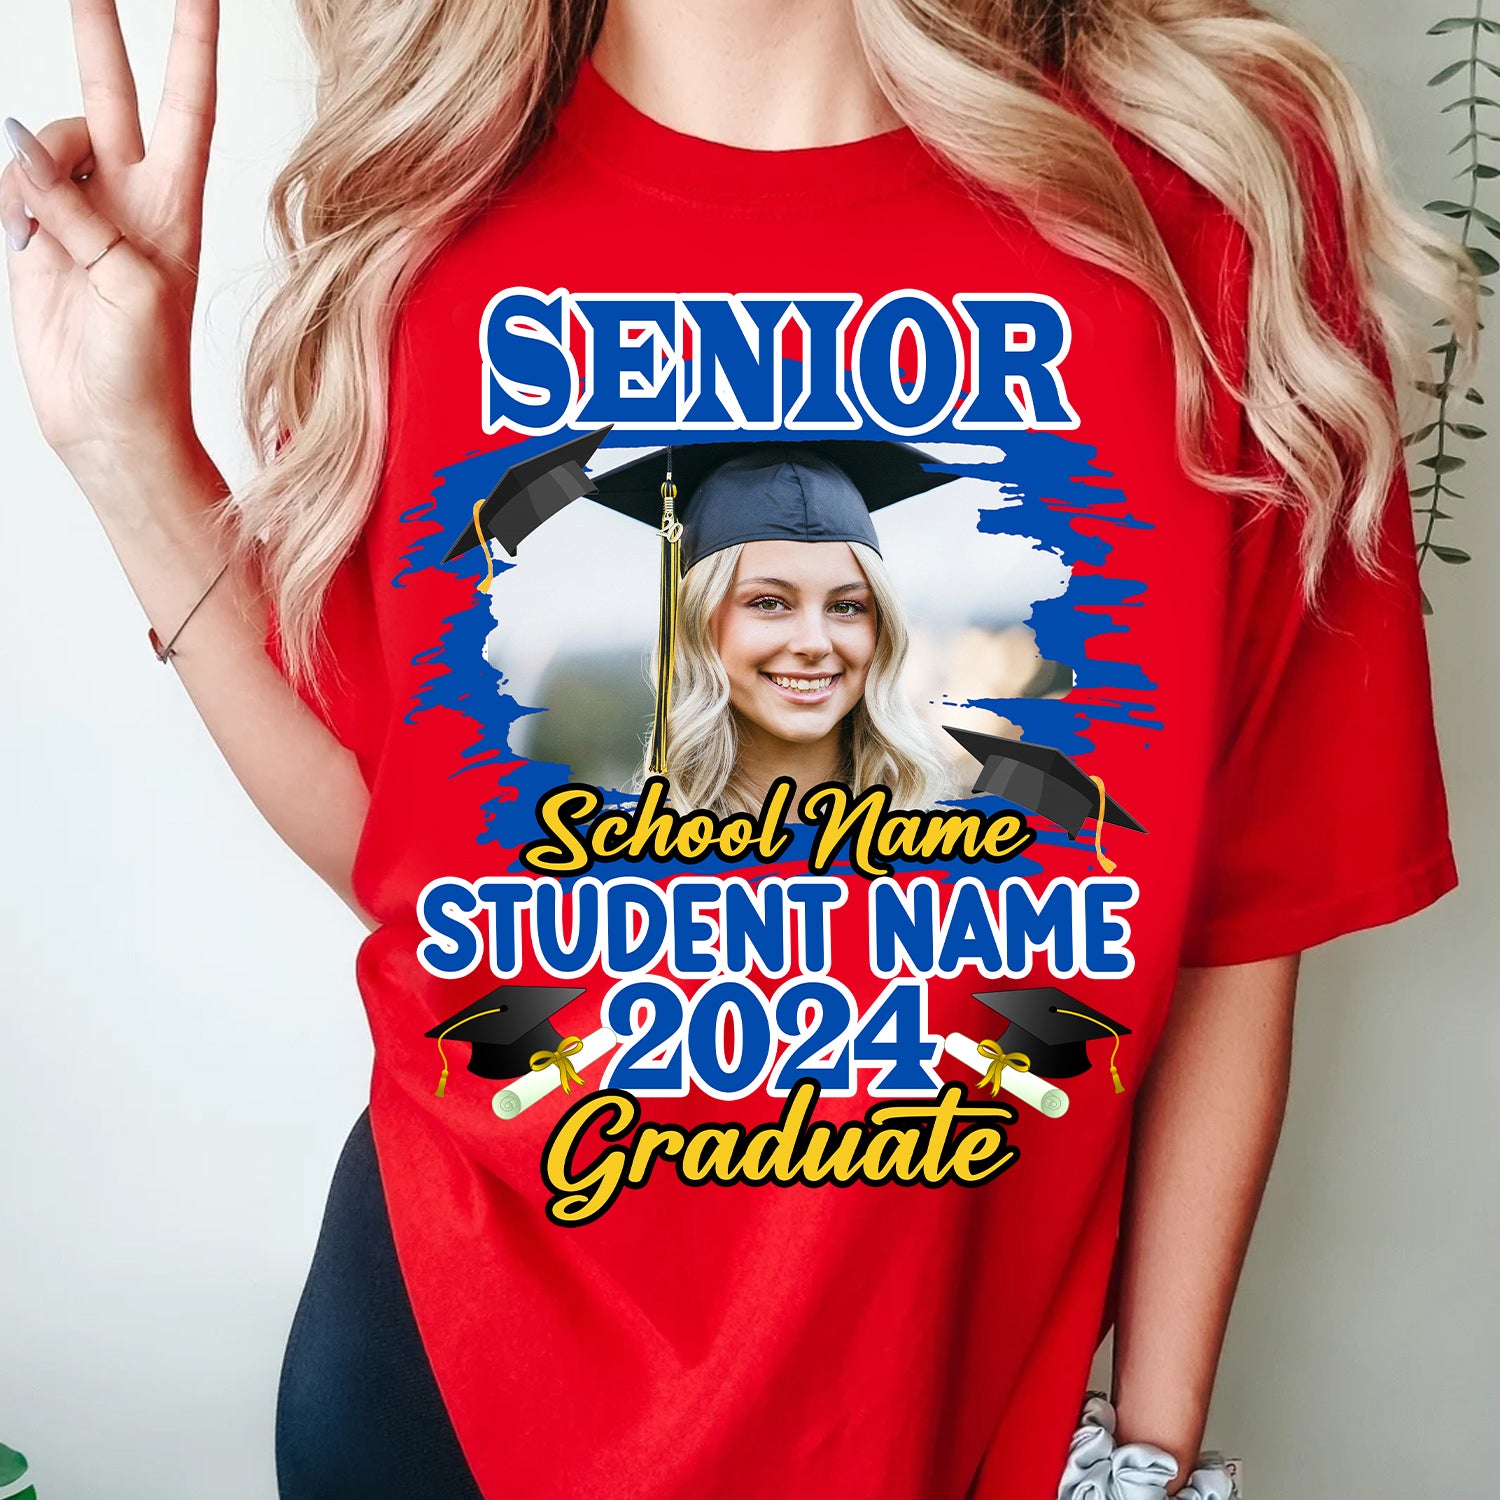 Congrats Senior Graduate 2024 - Custom Photo And Texts Graduation Gift - Personalized T-Shirt